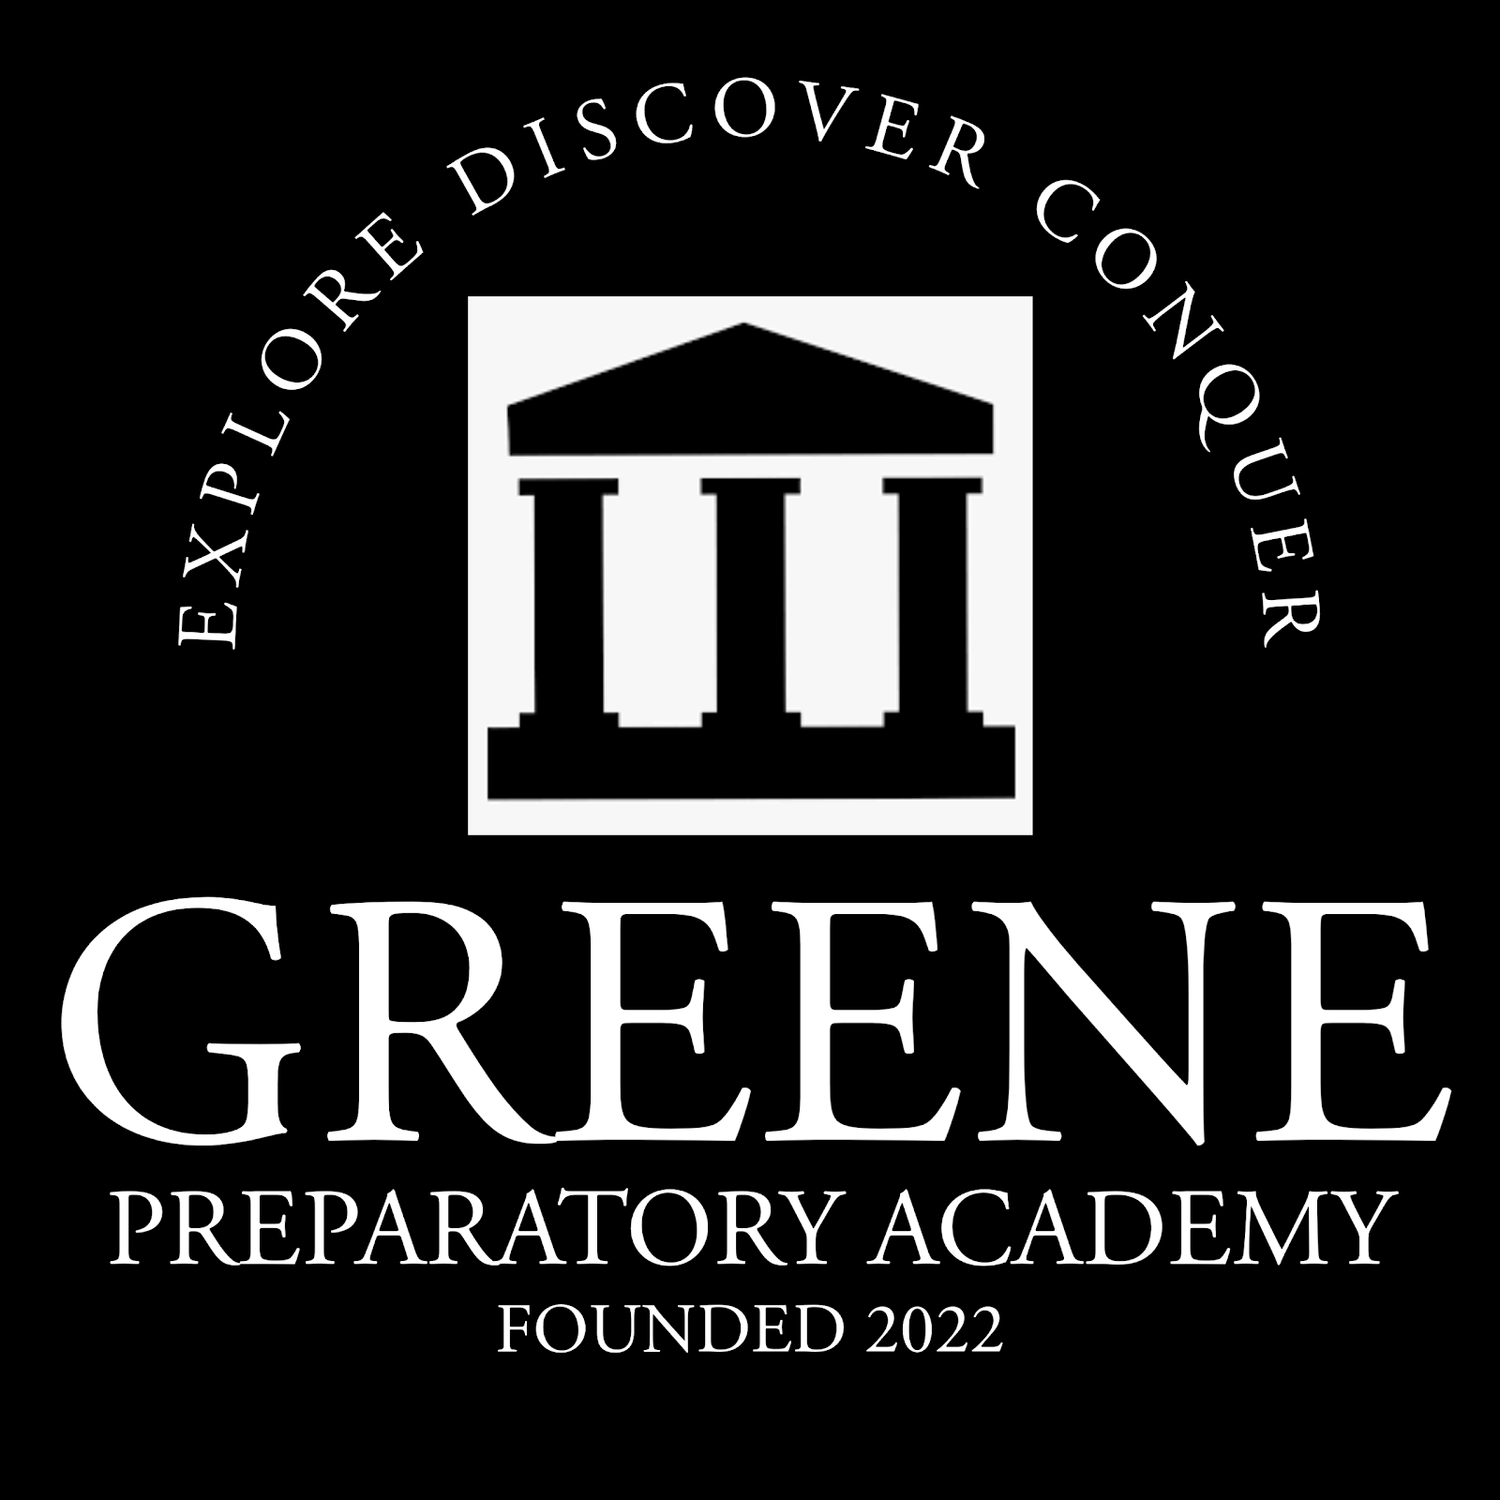 Greene Preparatory Academy